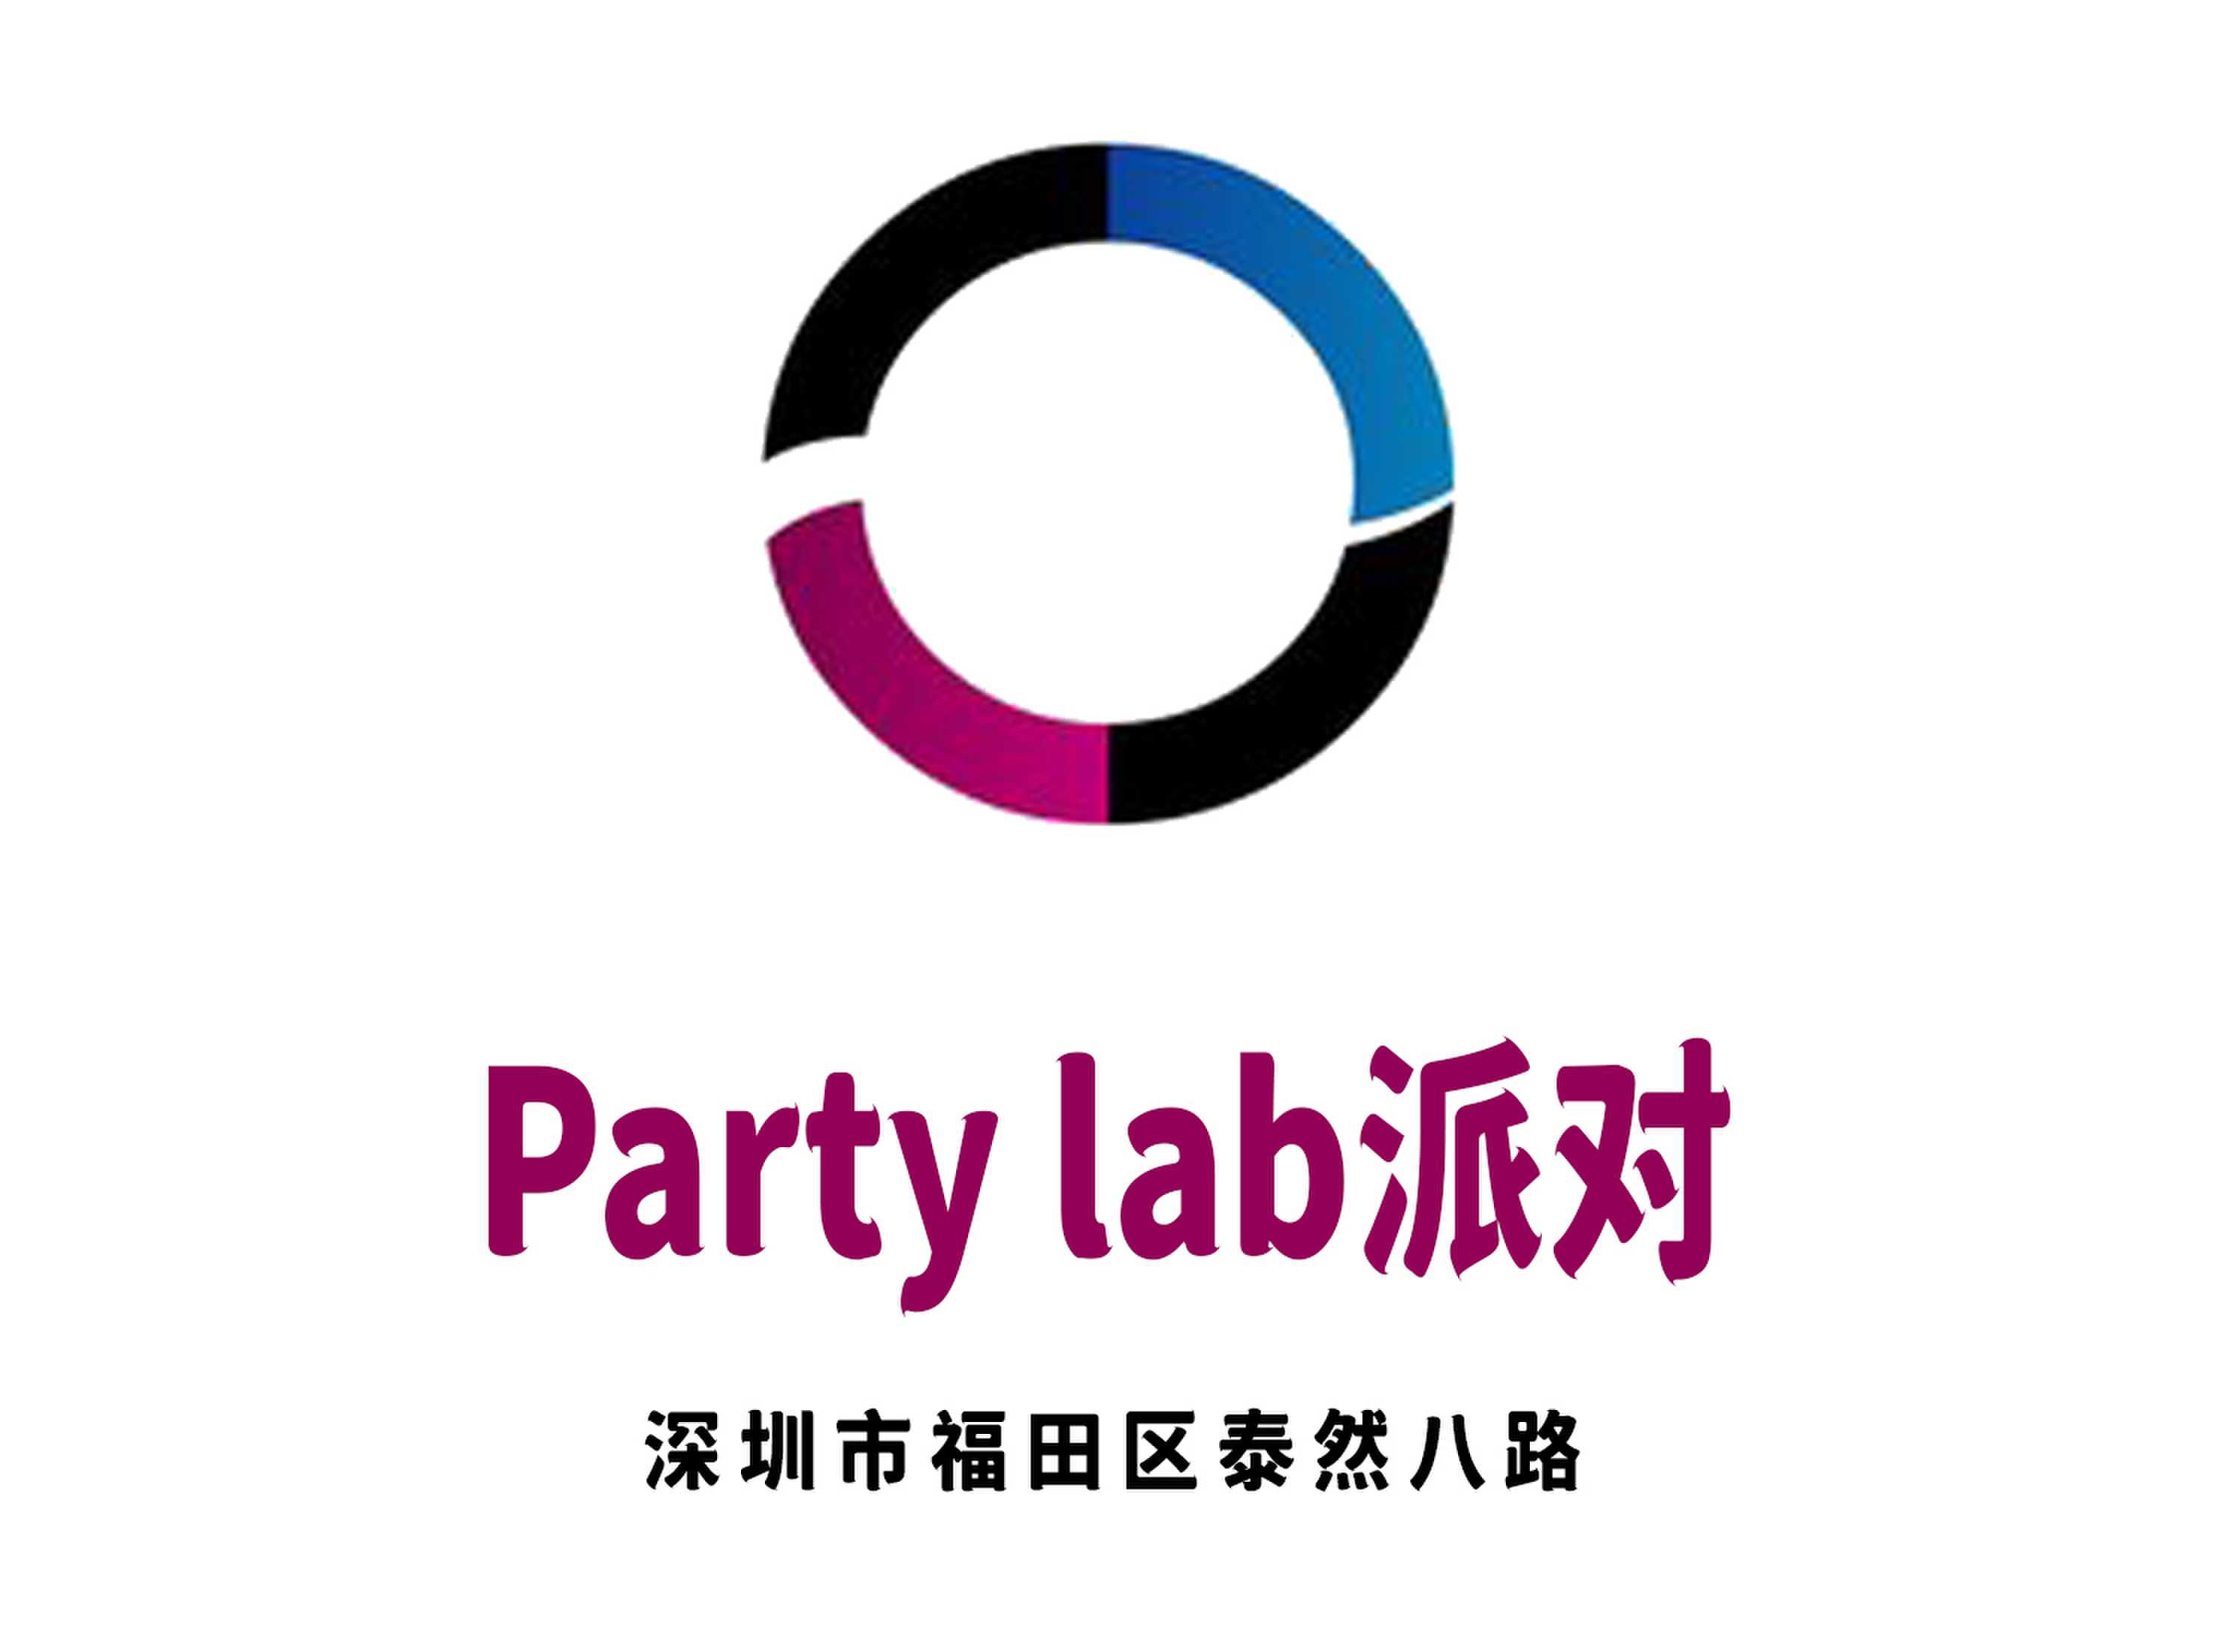 Party lab派对KTV